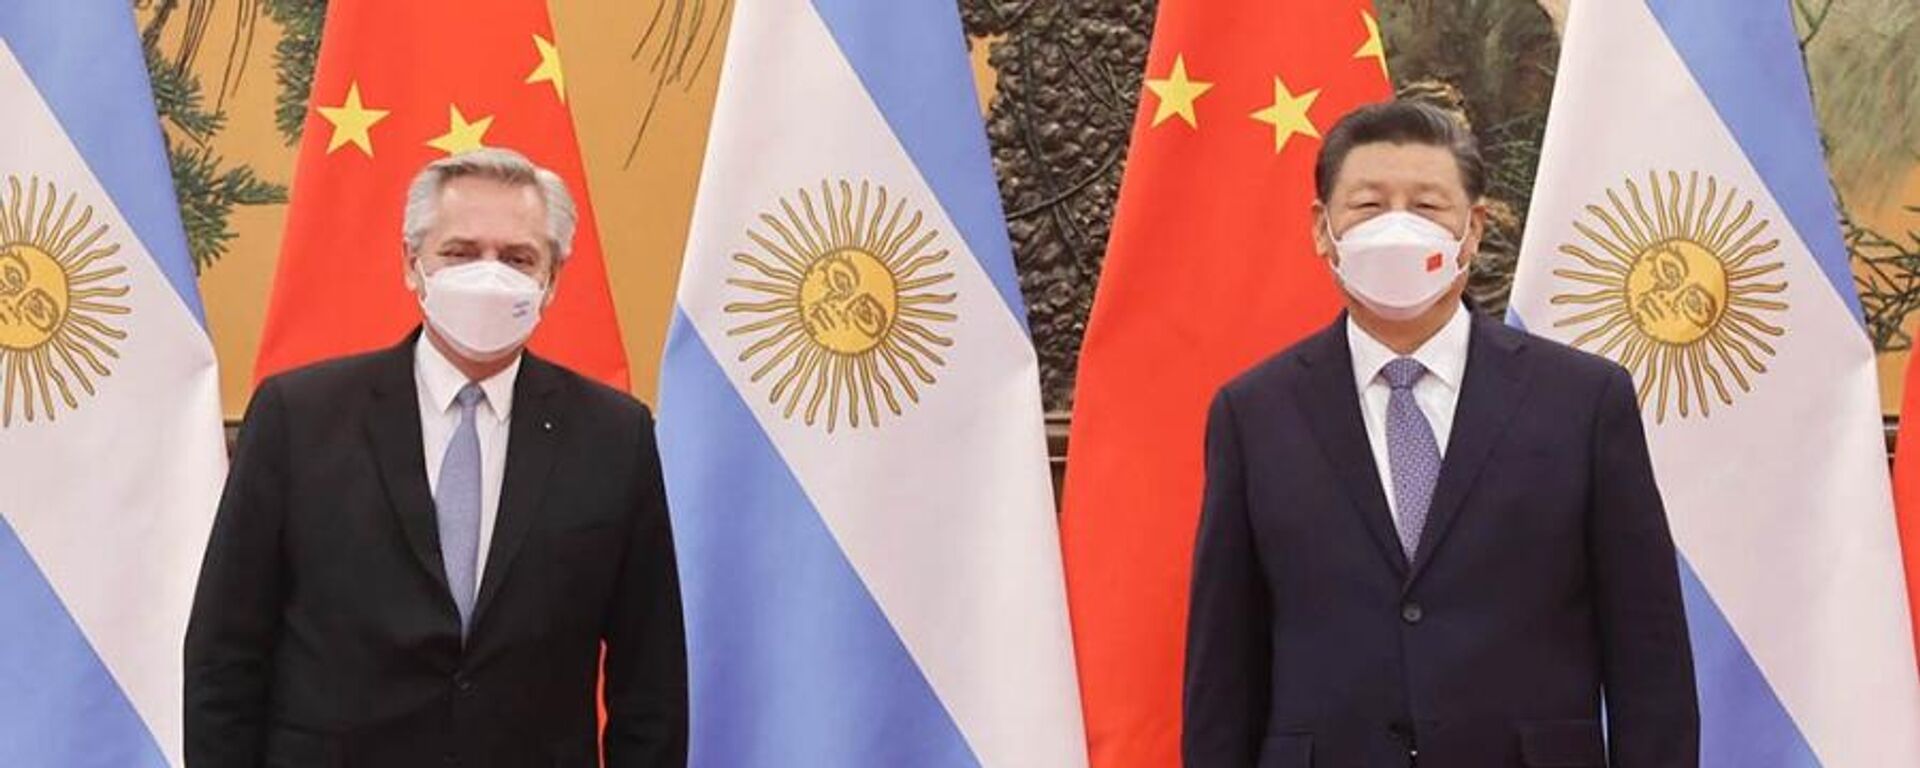 Alberto Fernández, presidente de Argentina, y Xi Jinping, presidente de China - Sputnik Mundo, 1920, 08.09.2022